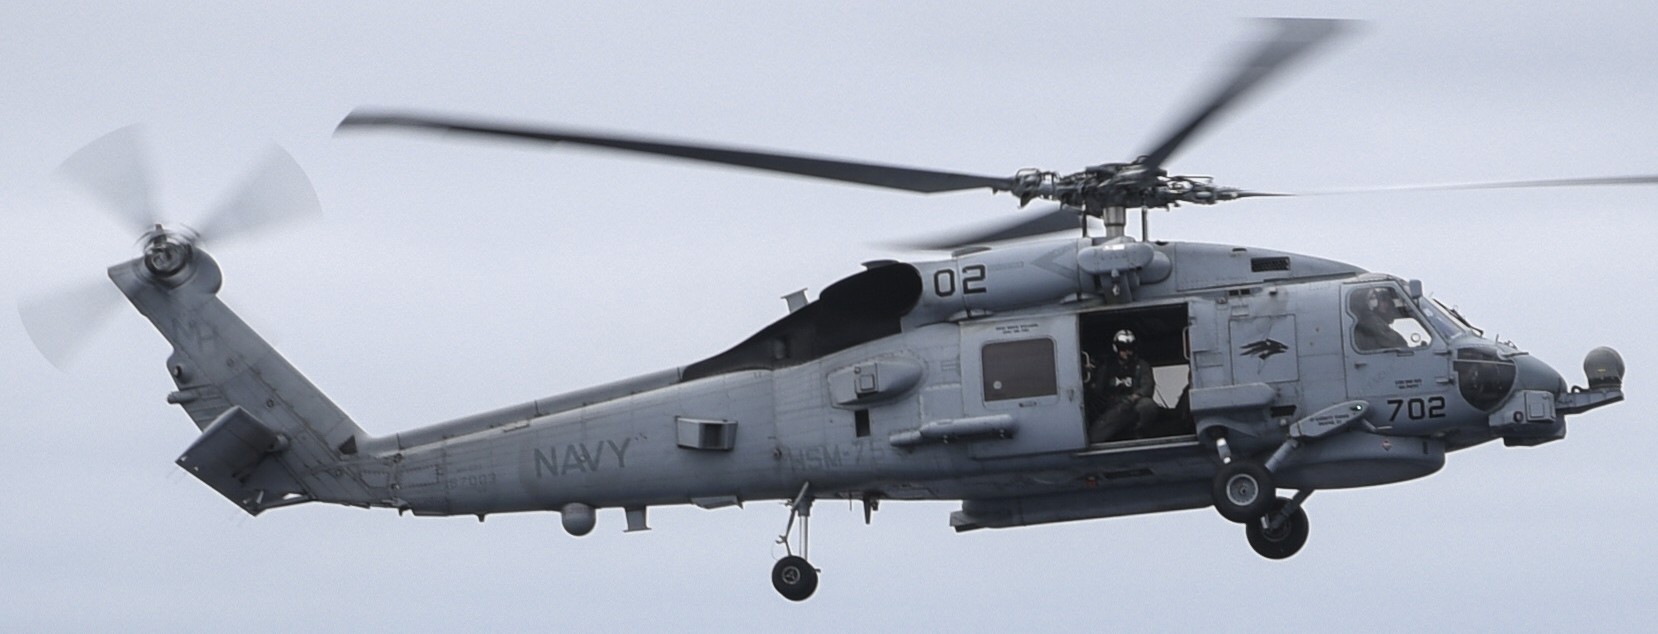 hsm-75 wolf pack helicopter maritime strike squadron mh-60r seahawk cvw-11 cvn-68 uss nimitz 45